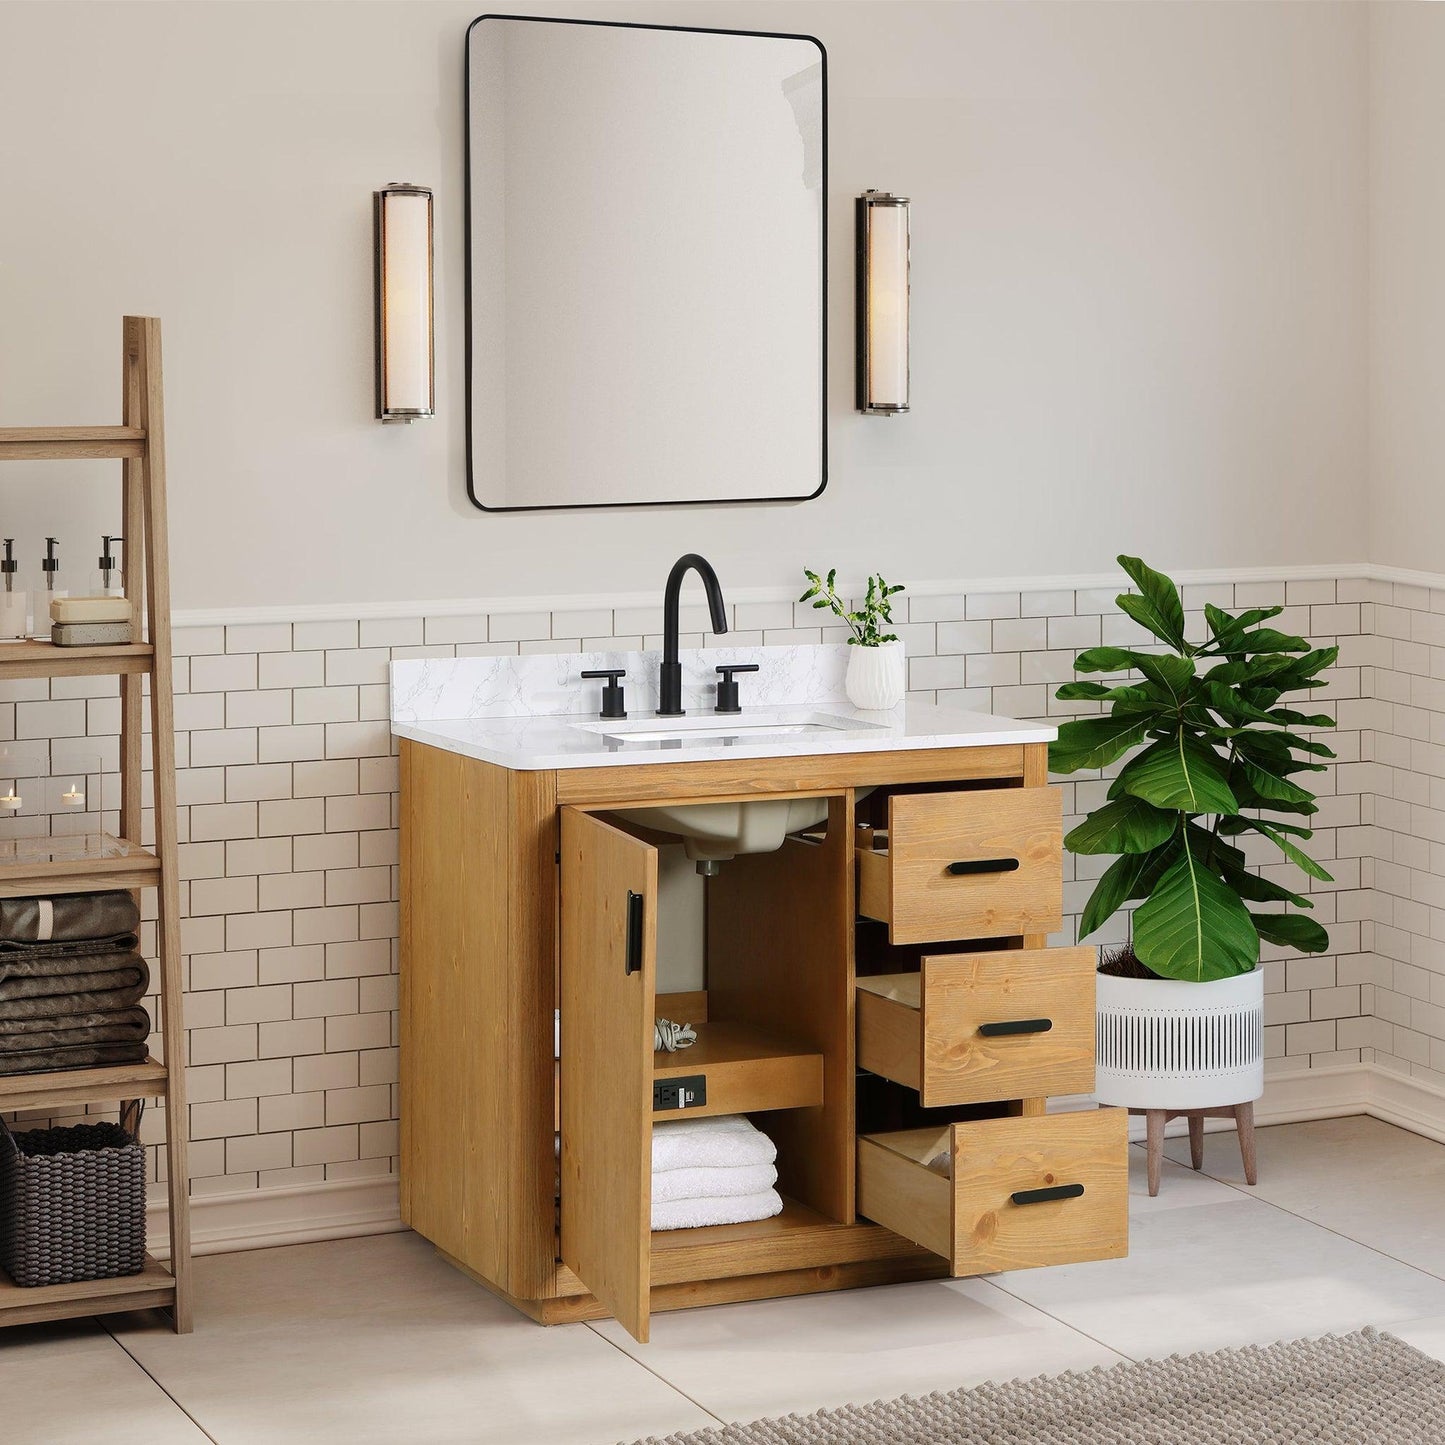 Altair Perla 36" Natural Wood Freestanding Single Bathroom Vanity Set With Mirror, Grain White Composite Stone Top, Single Rectangular Undermount Ceramic Sink, and Overflow